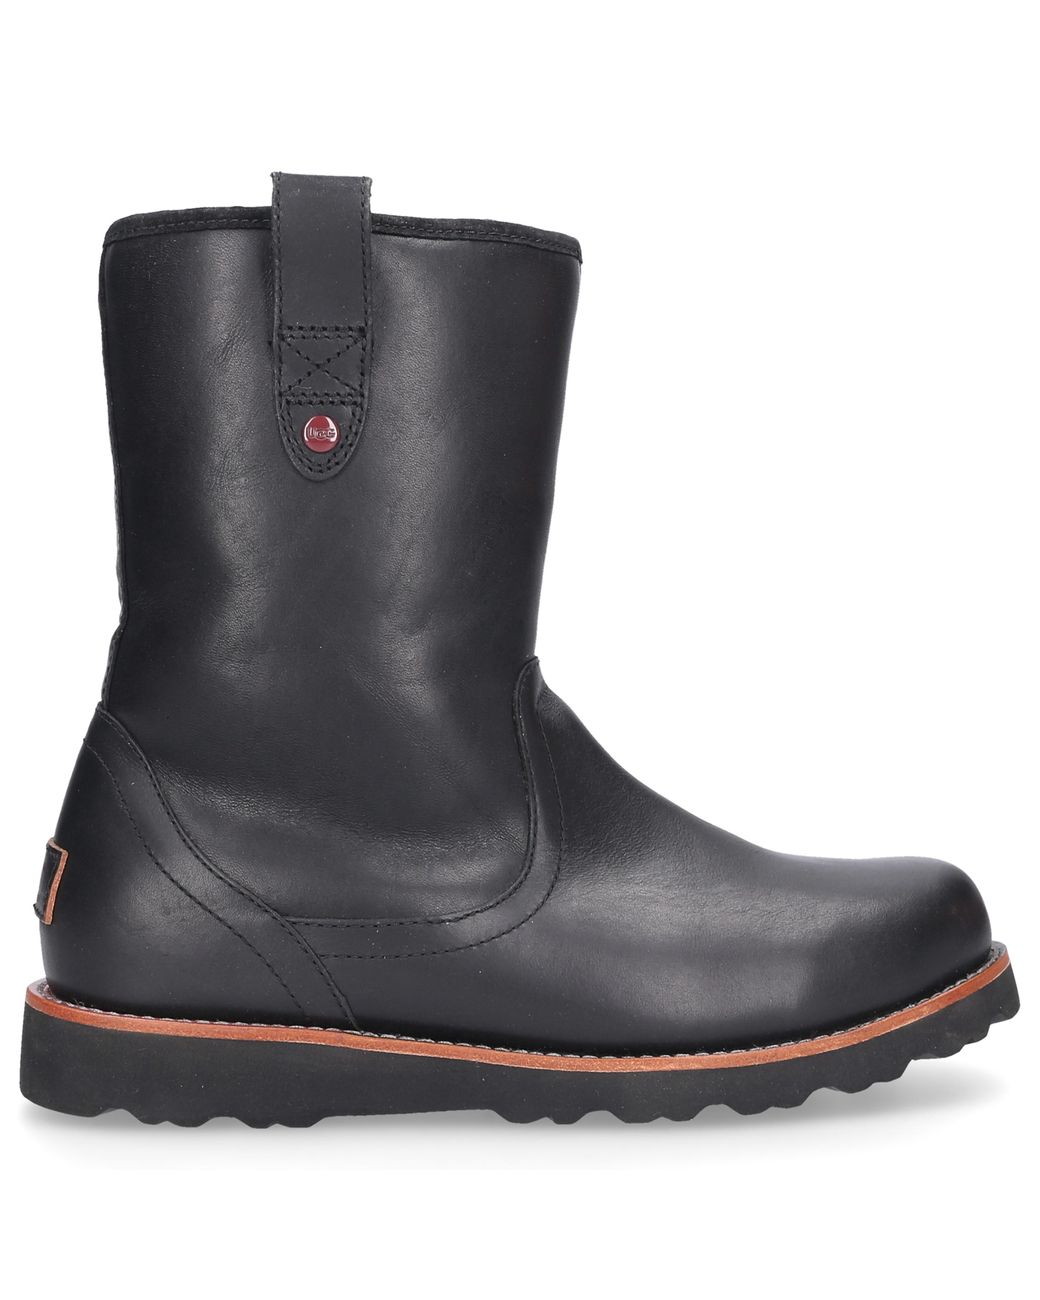 UGG Boots Stoneman Calfskin in Black for Men - Lyst